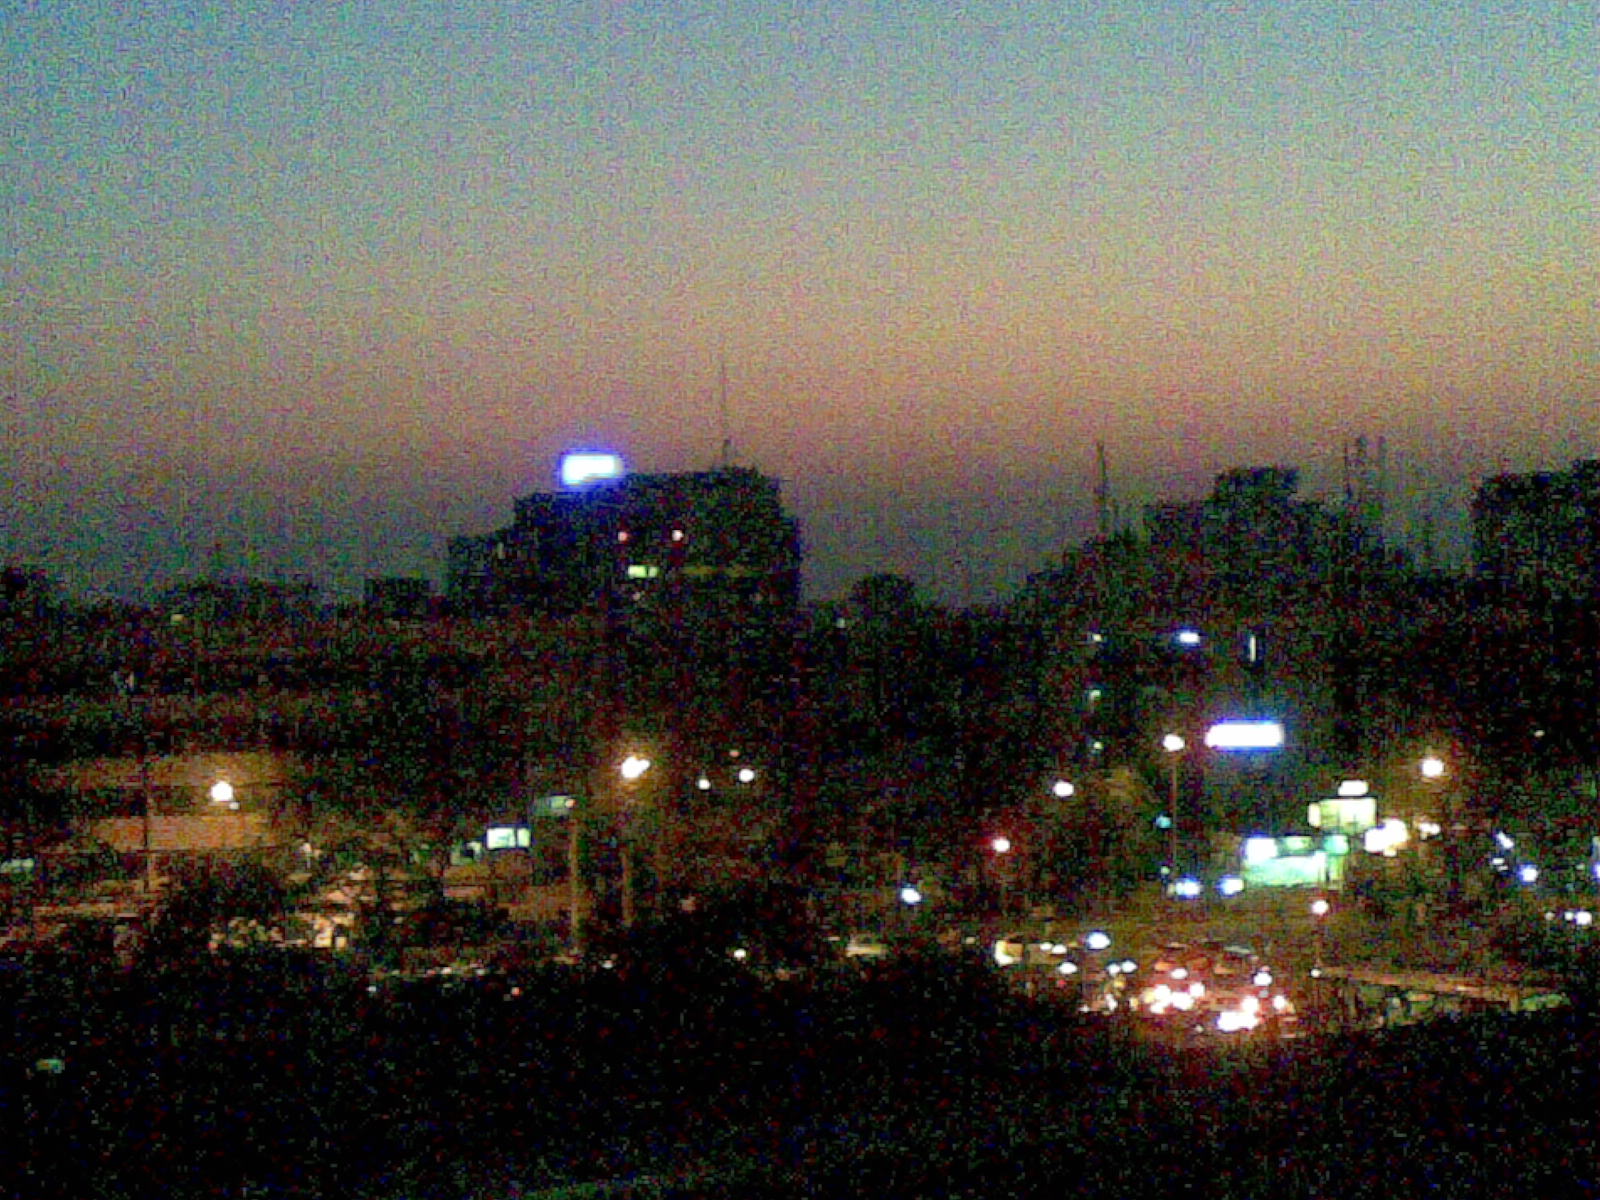 Chennai : Chennai City at Night